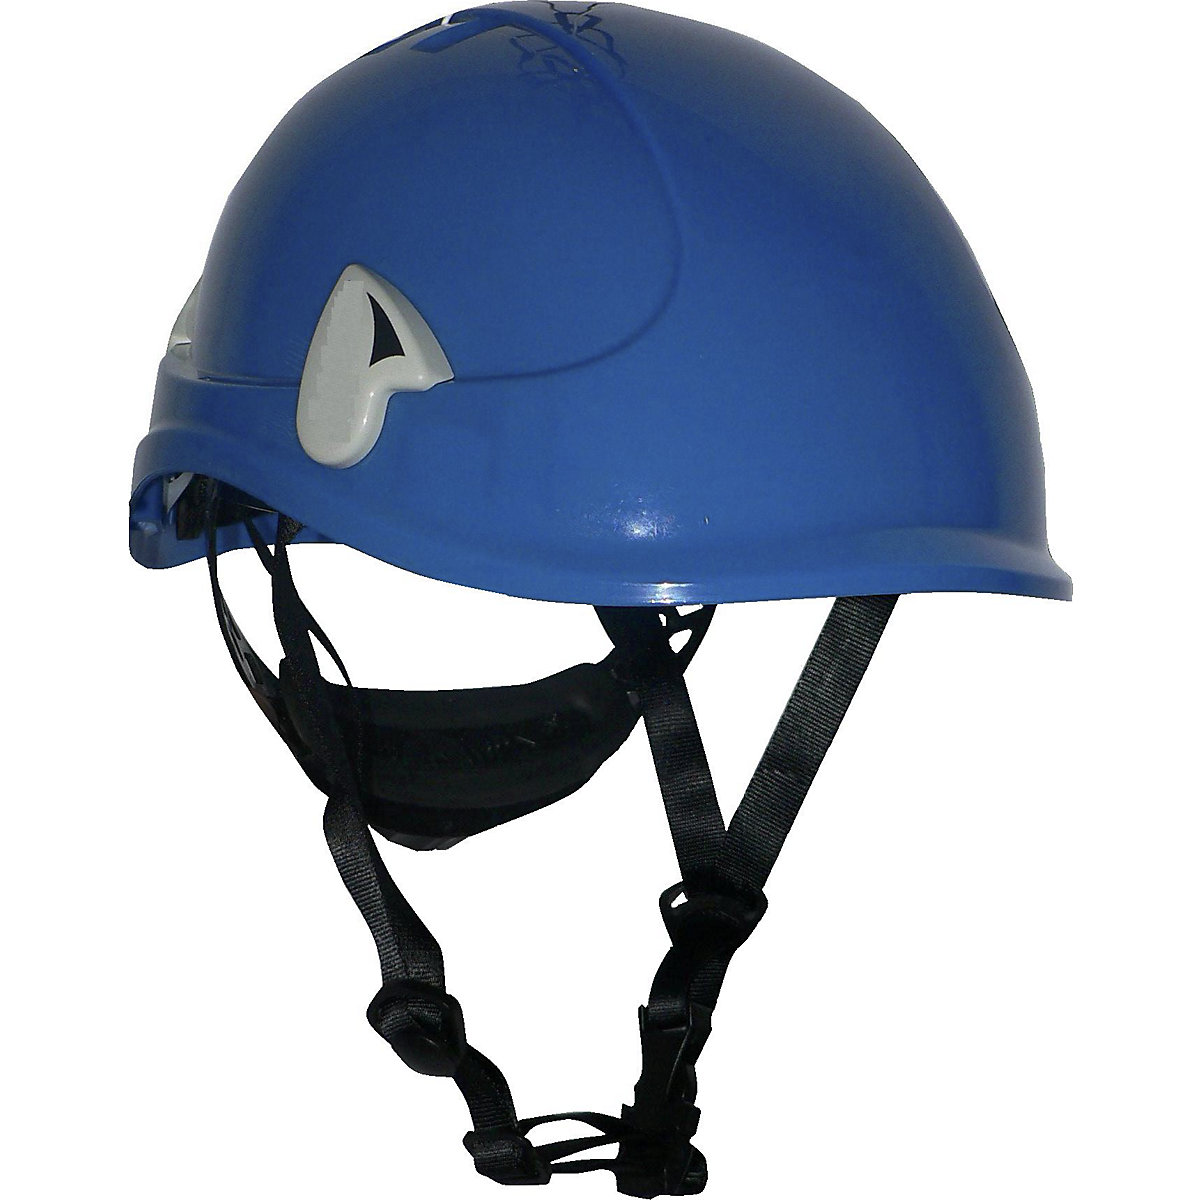 TR 2000 safety helmet